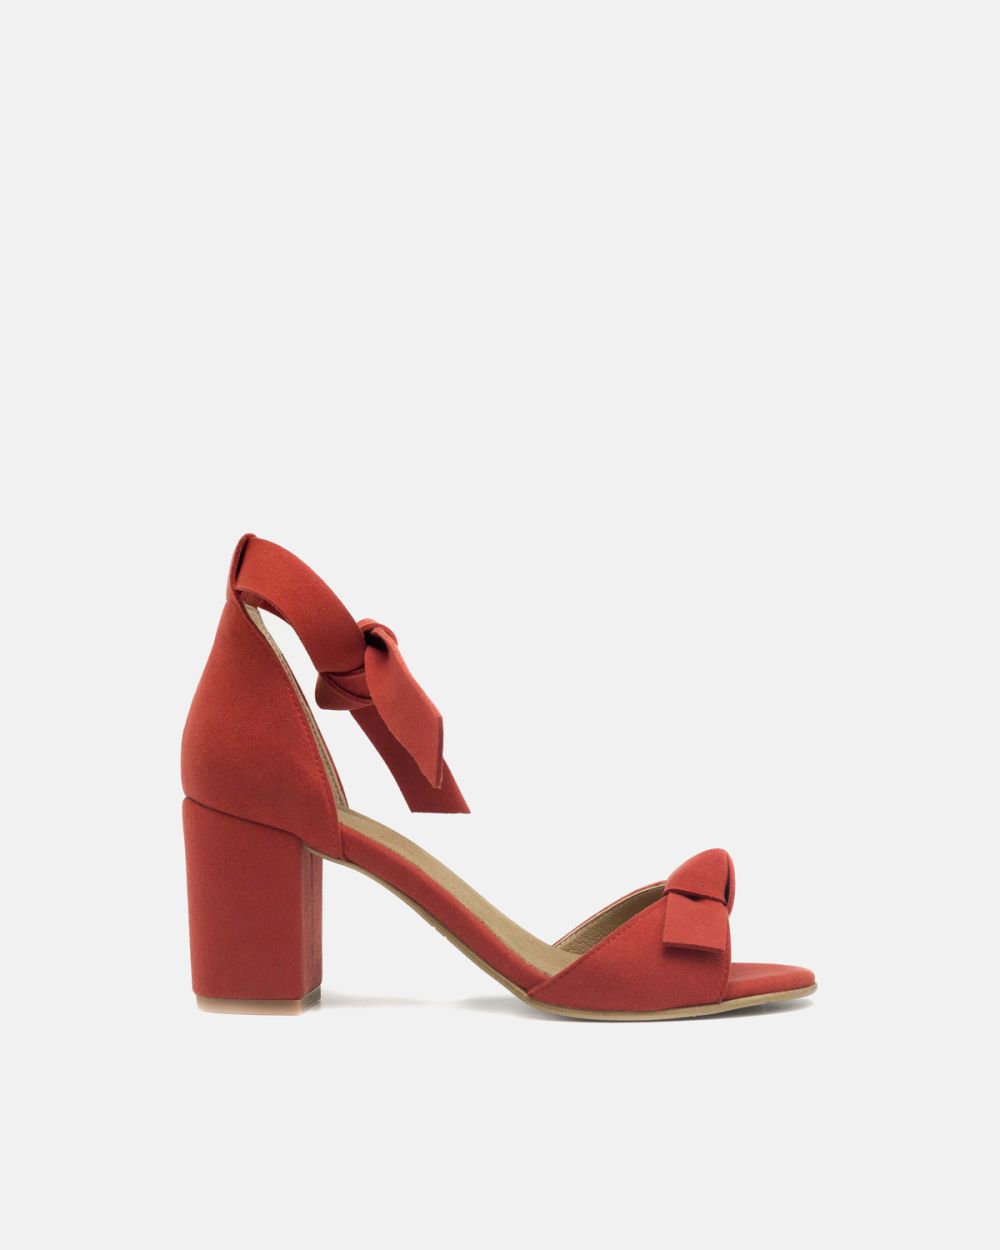 Estela - Red ankle strap sandal